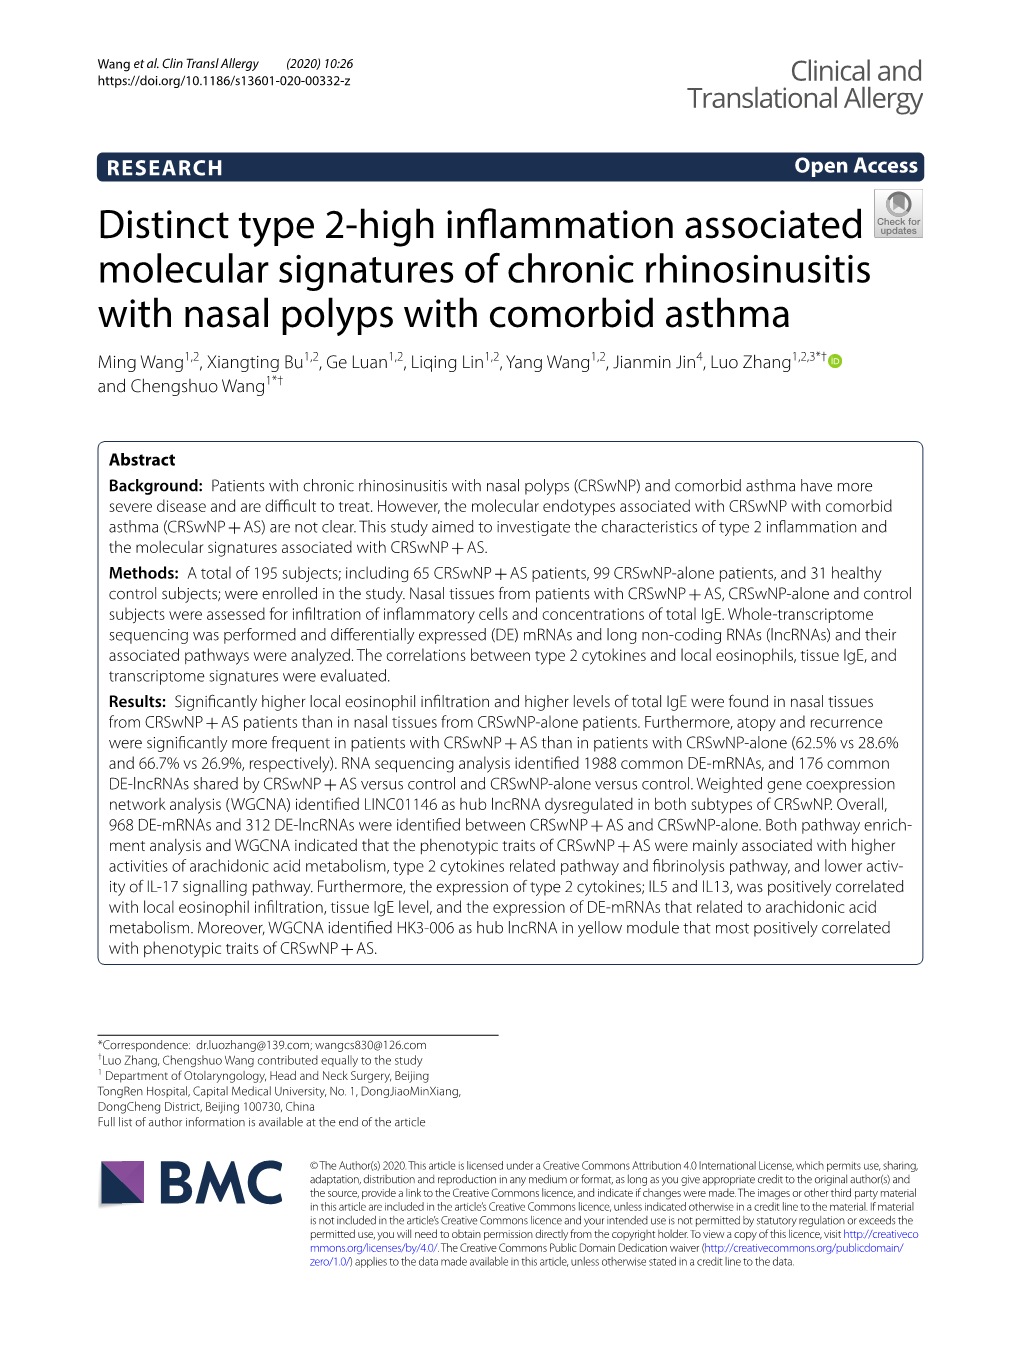 Distinct Type 2-High Inflammation Associated Molecular Signatures Of